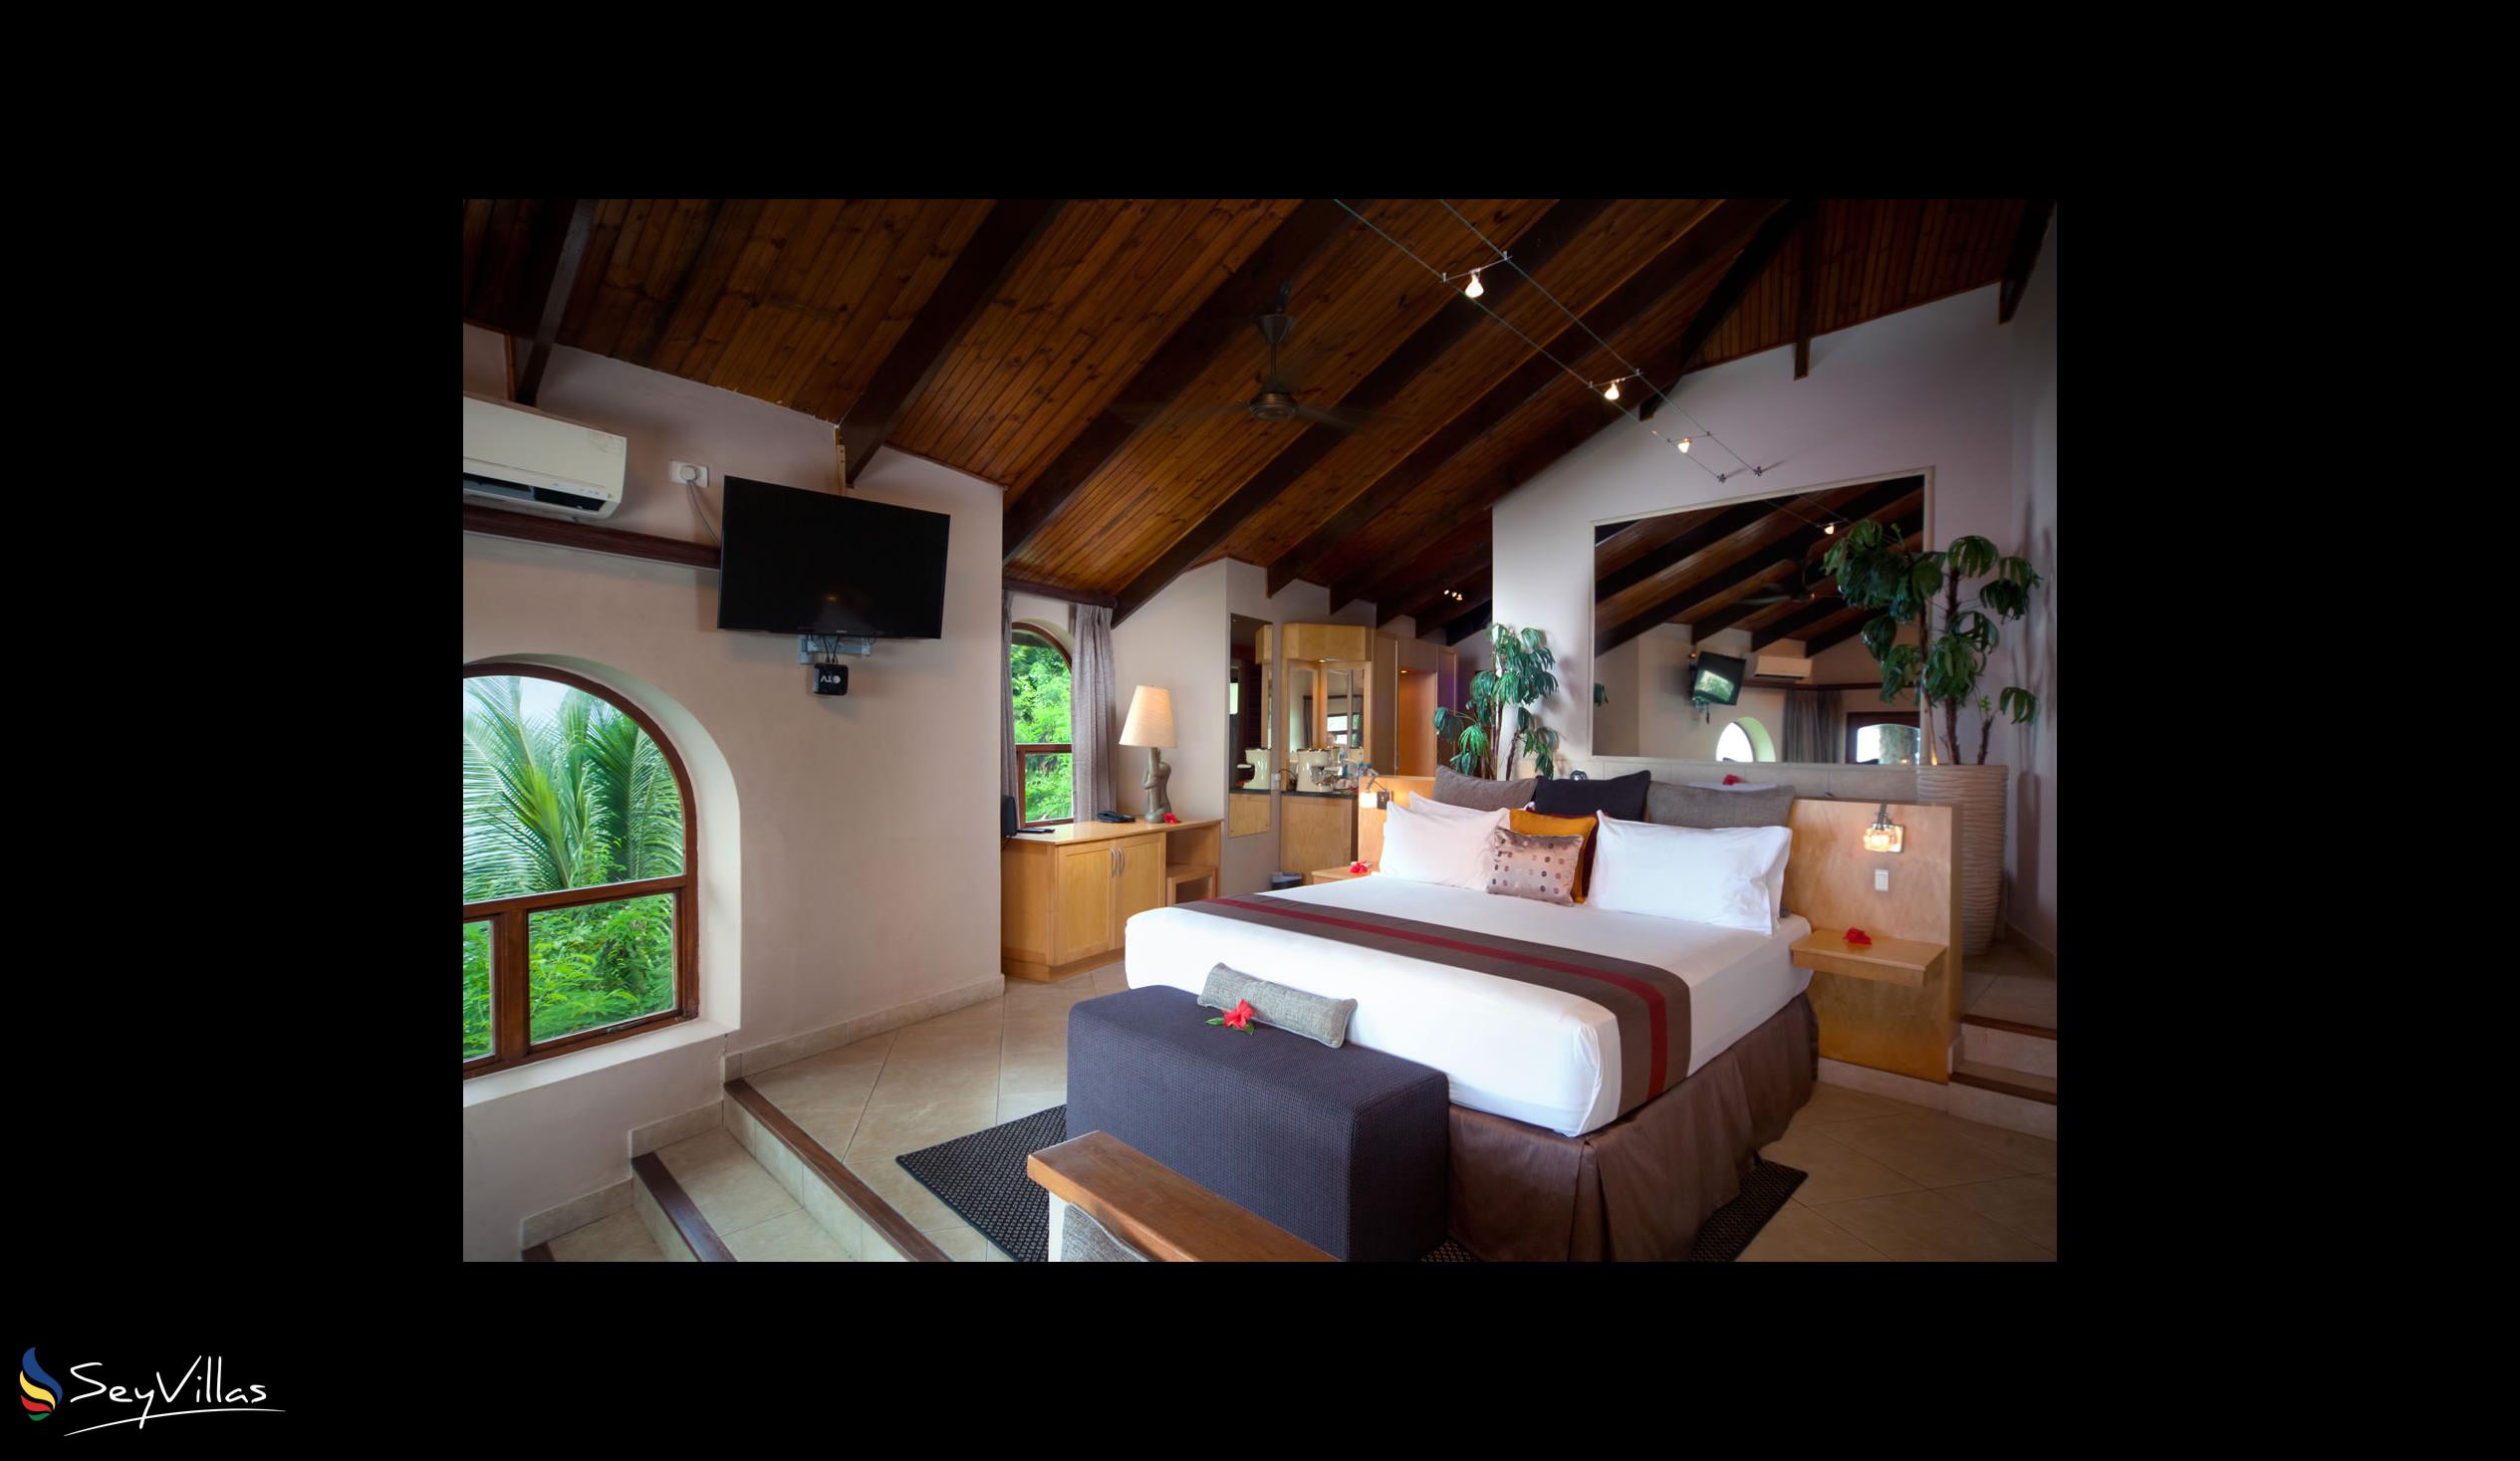 Photo 79: Coco de Mer & Black Parrot Suites - Standard - Praslin (Seychelles)